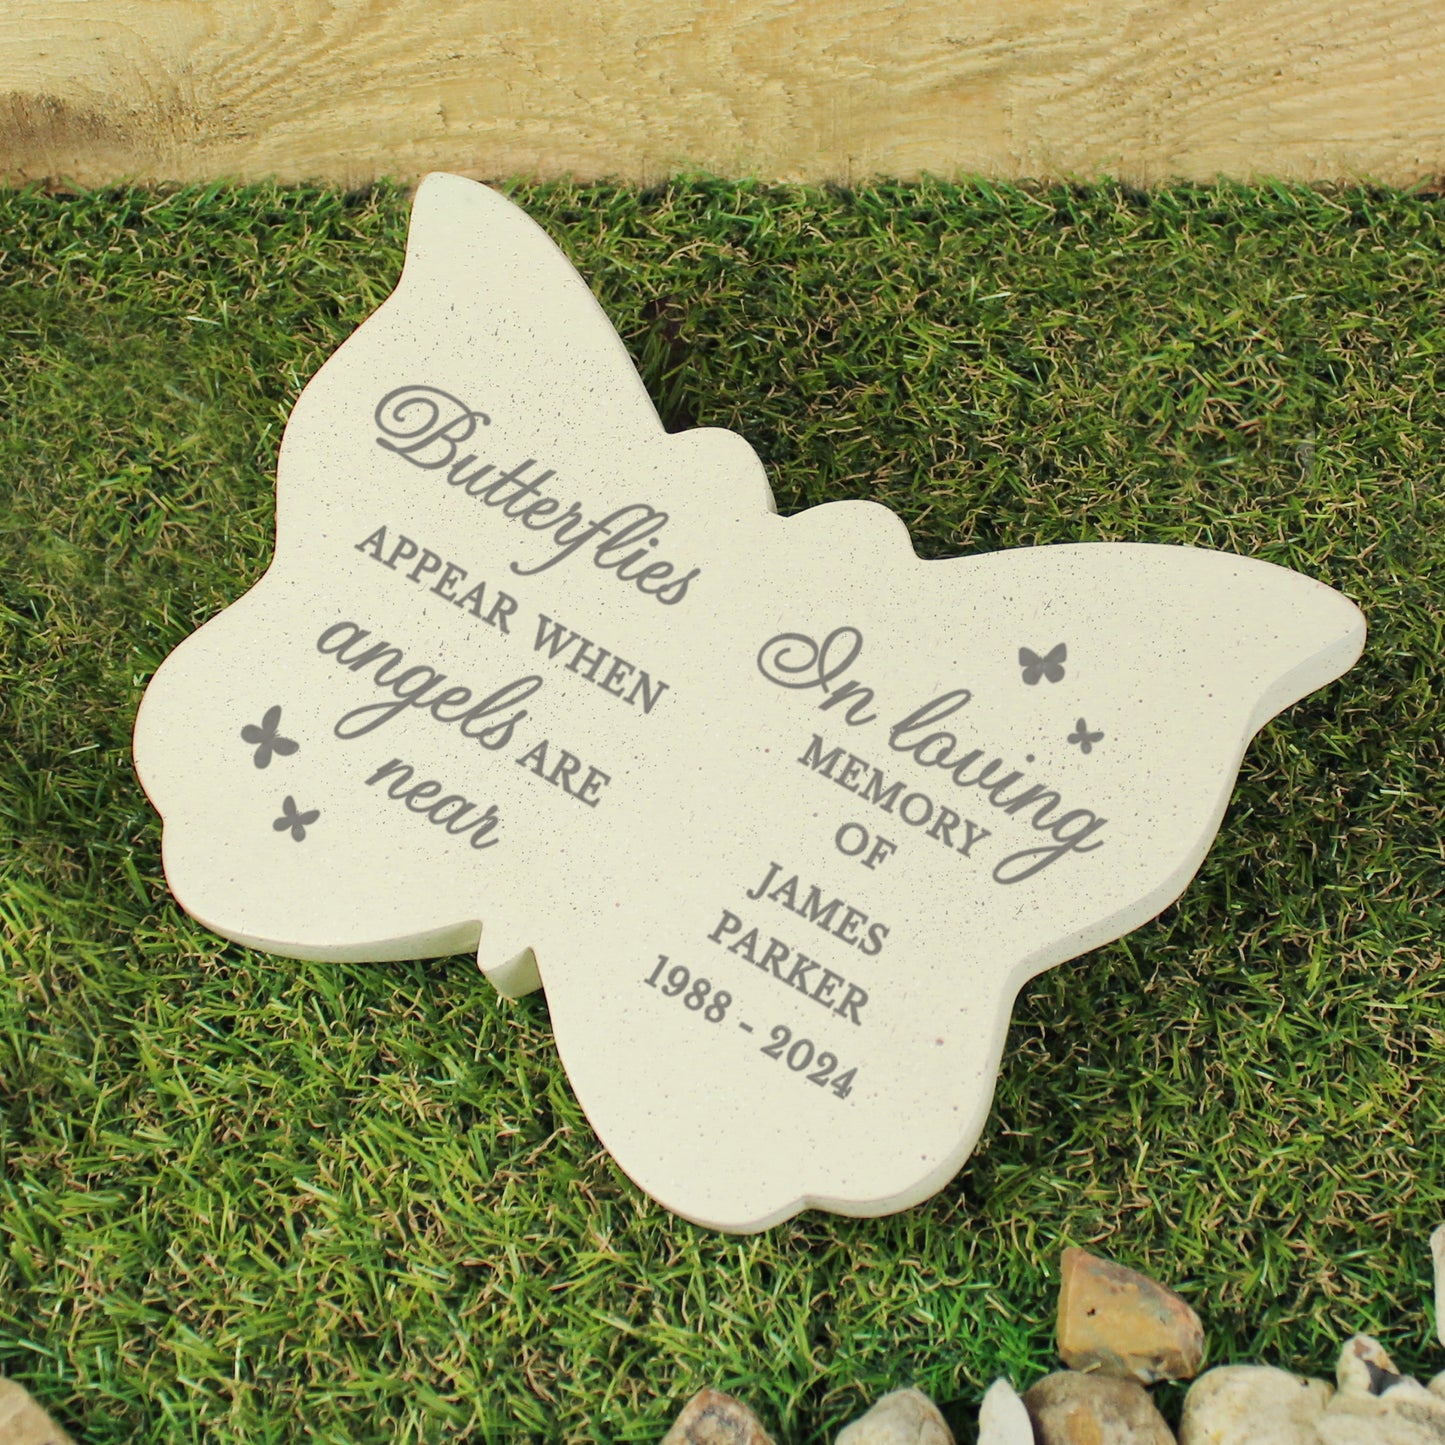 Personalised Memorial Butterfly Grave Marker - Butterflies Appear